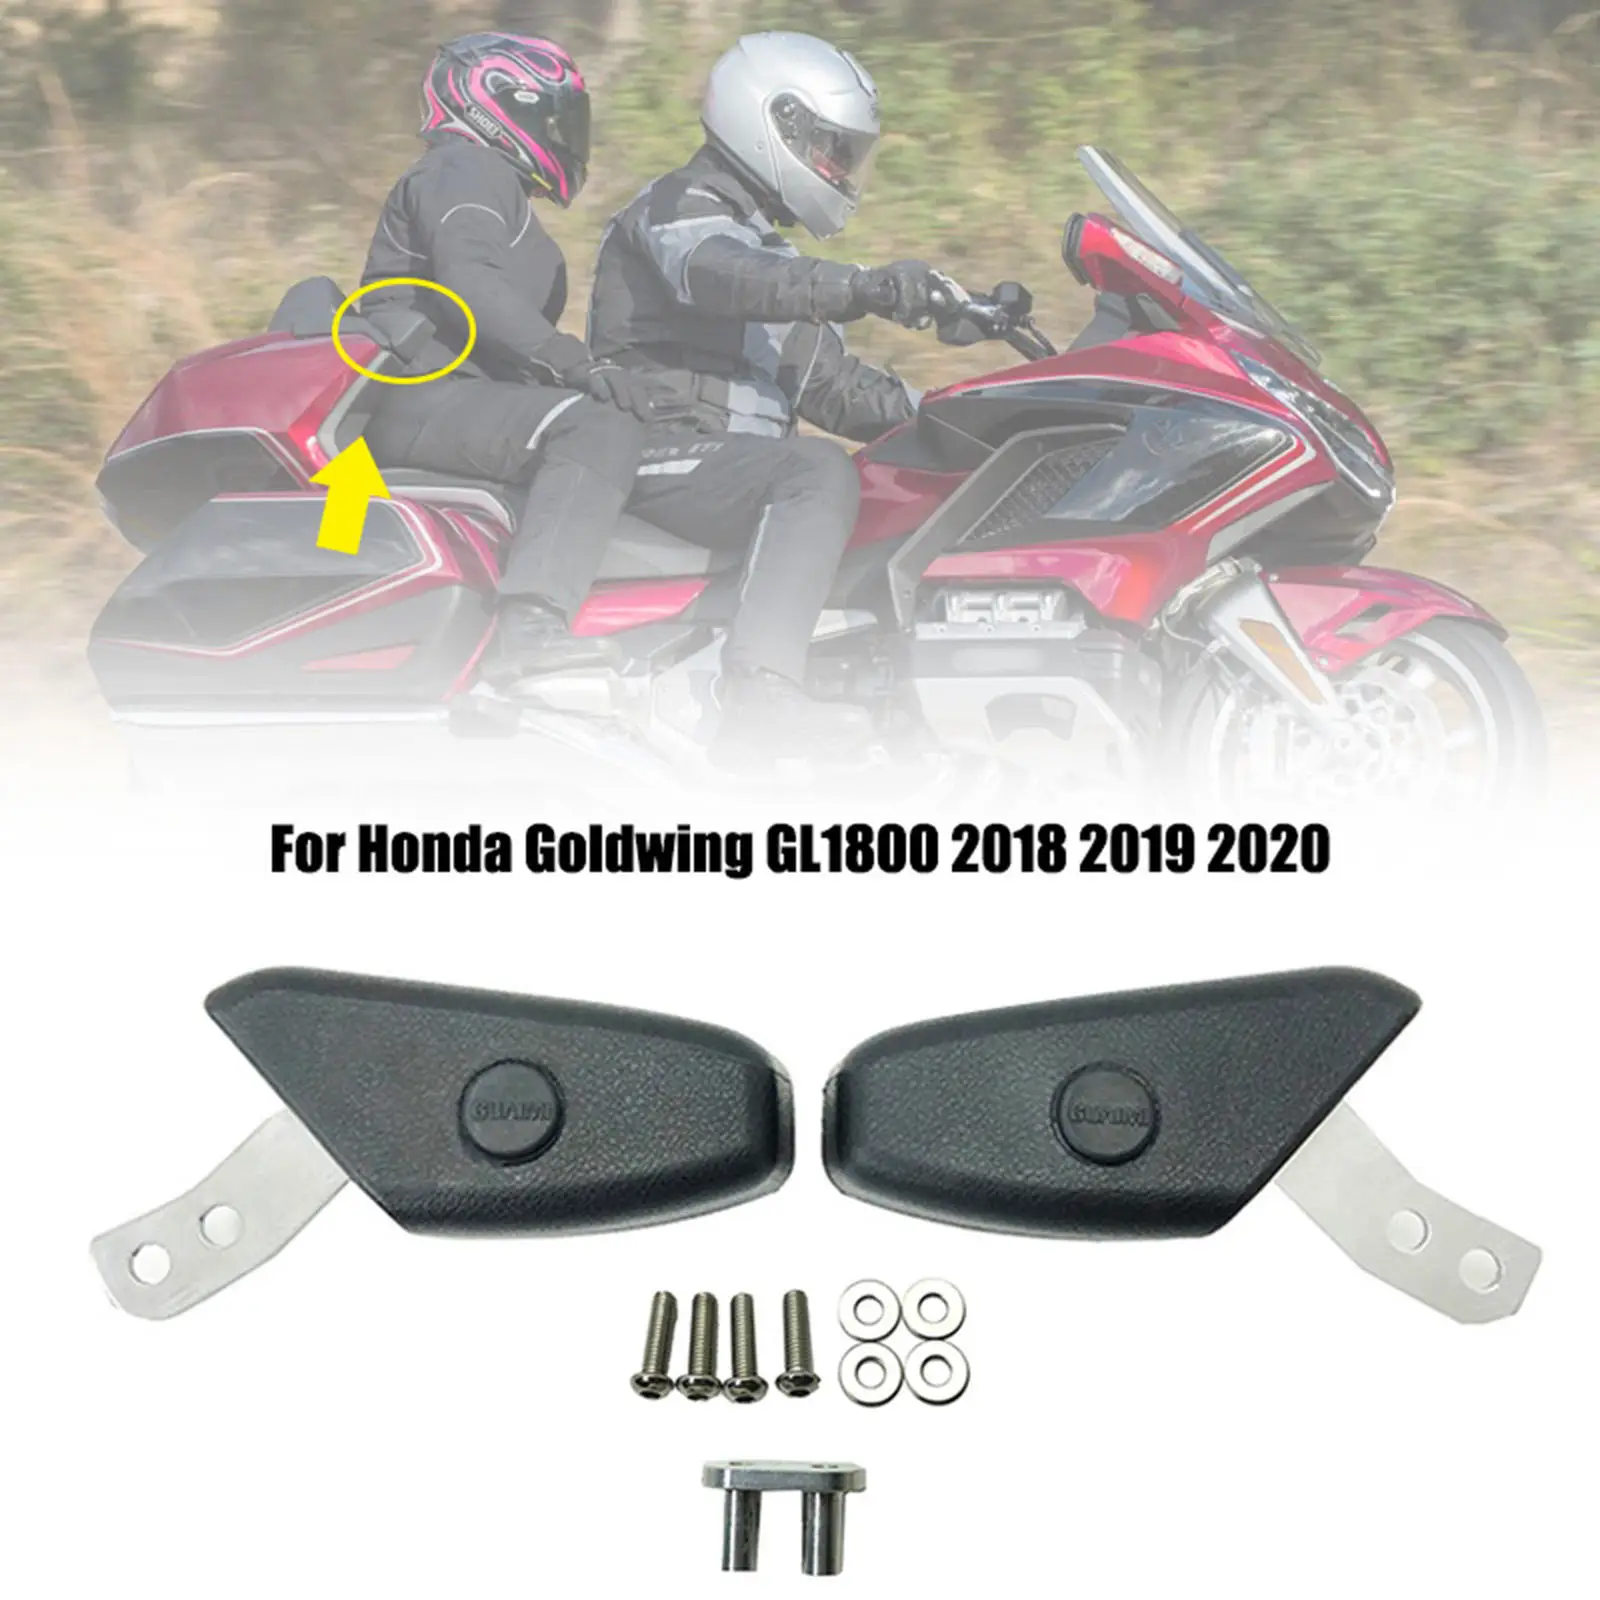 Motorcycle Rear Passenger Armrest Left&Right Accessories for HONDA Goldwing 1800 GL1800 F6C 2018 2019 2020 Models